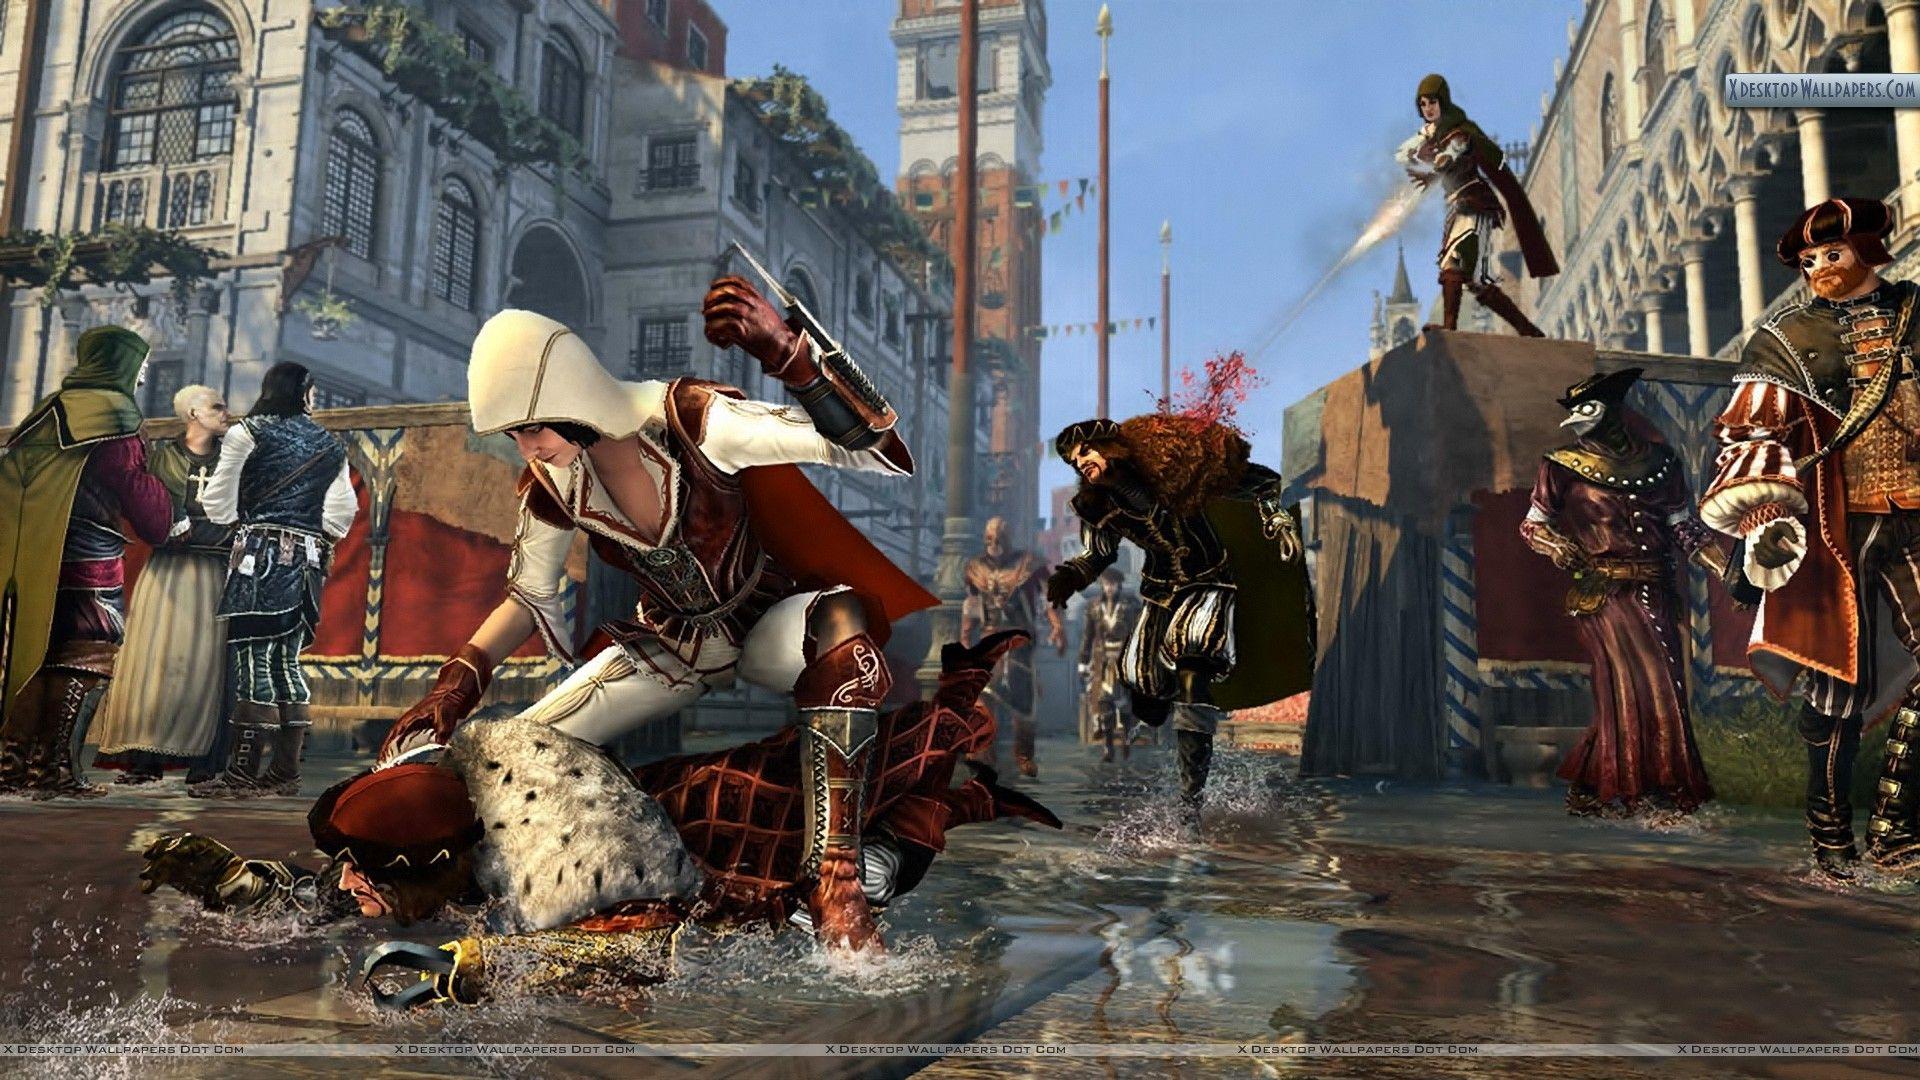 Brotherhood ii. Assassin's Creed: братство крови. Ассасин Крид братство крови. Assassins Creed 2 Венеция. Assassin’s Creed II: Brotherhood – 2010.